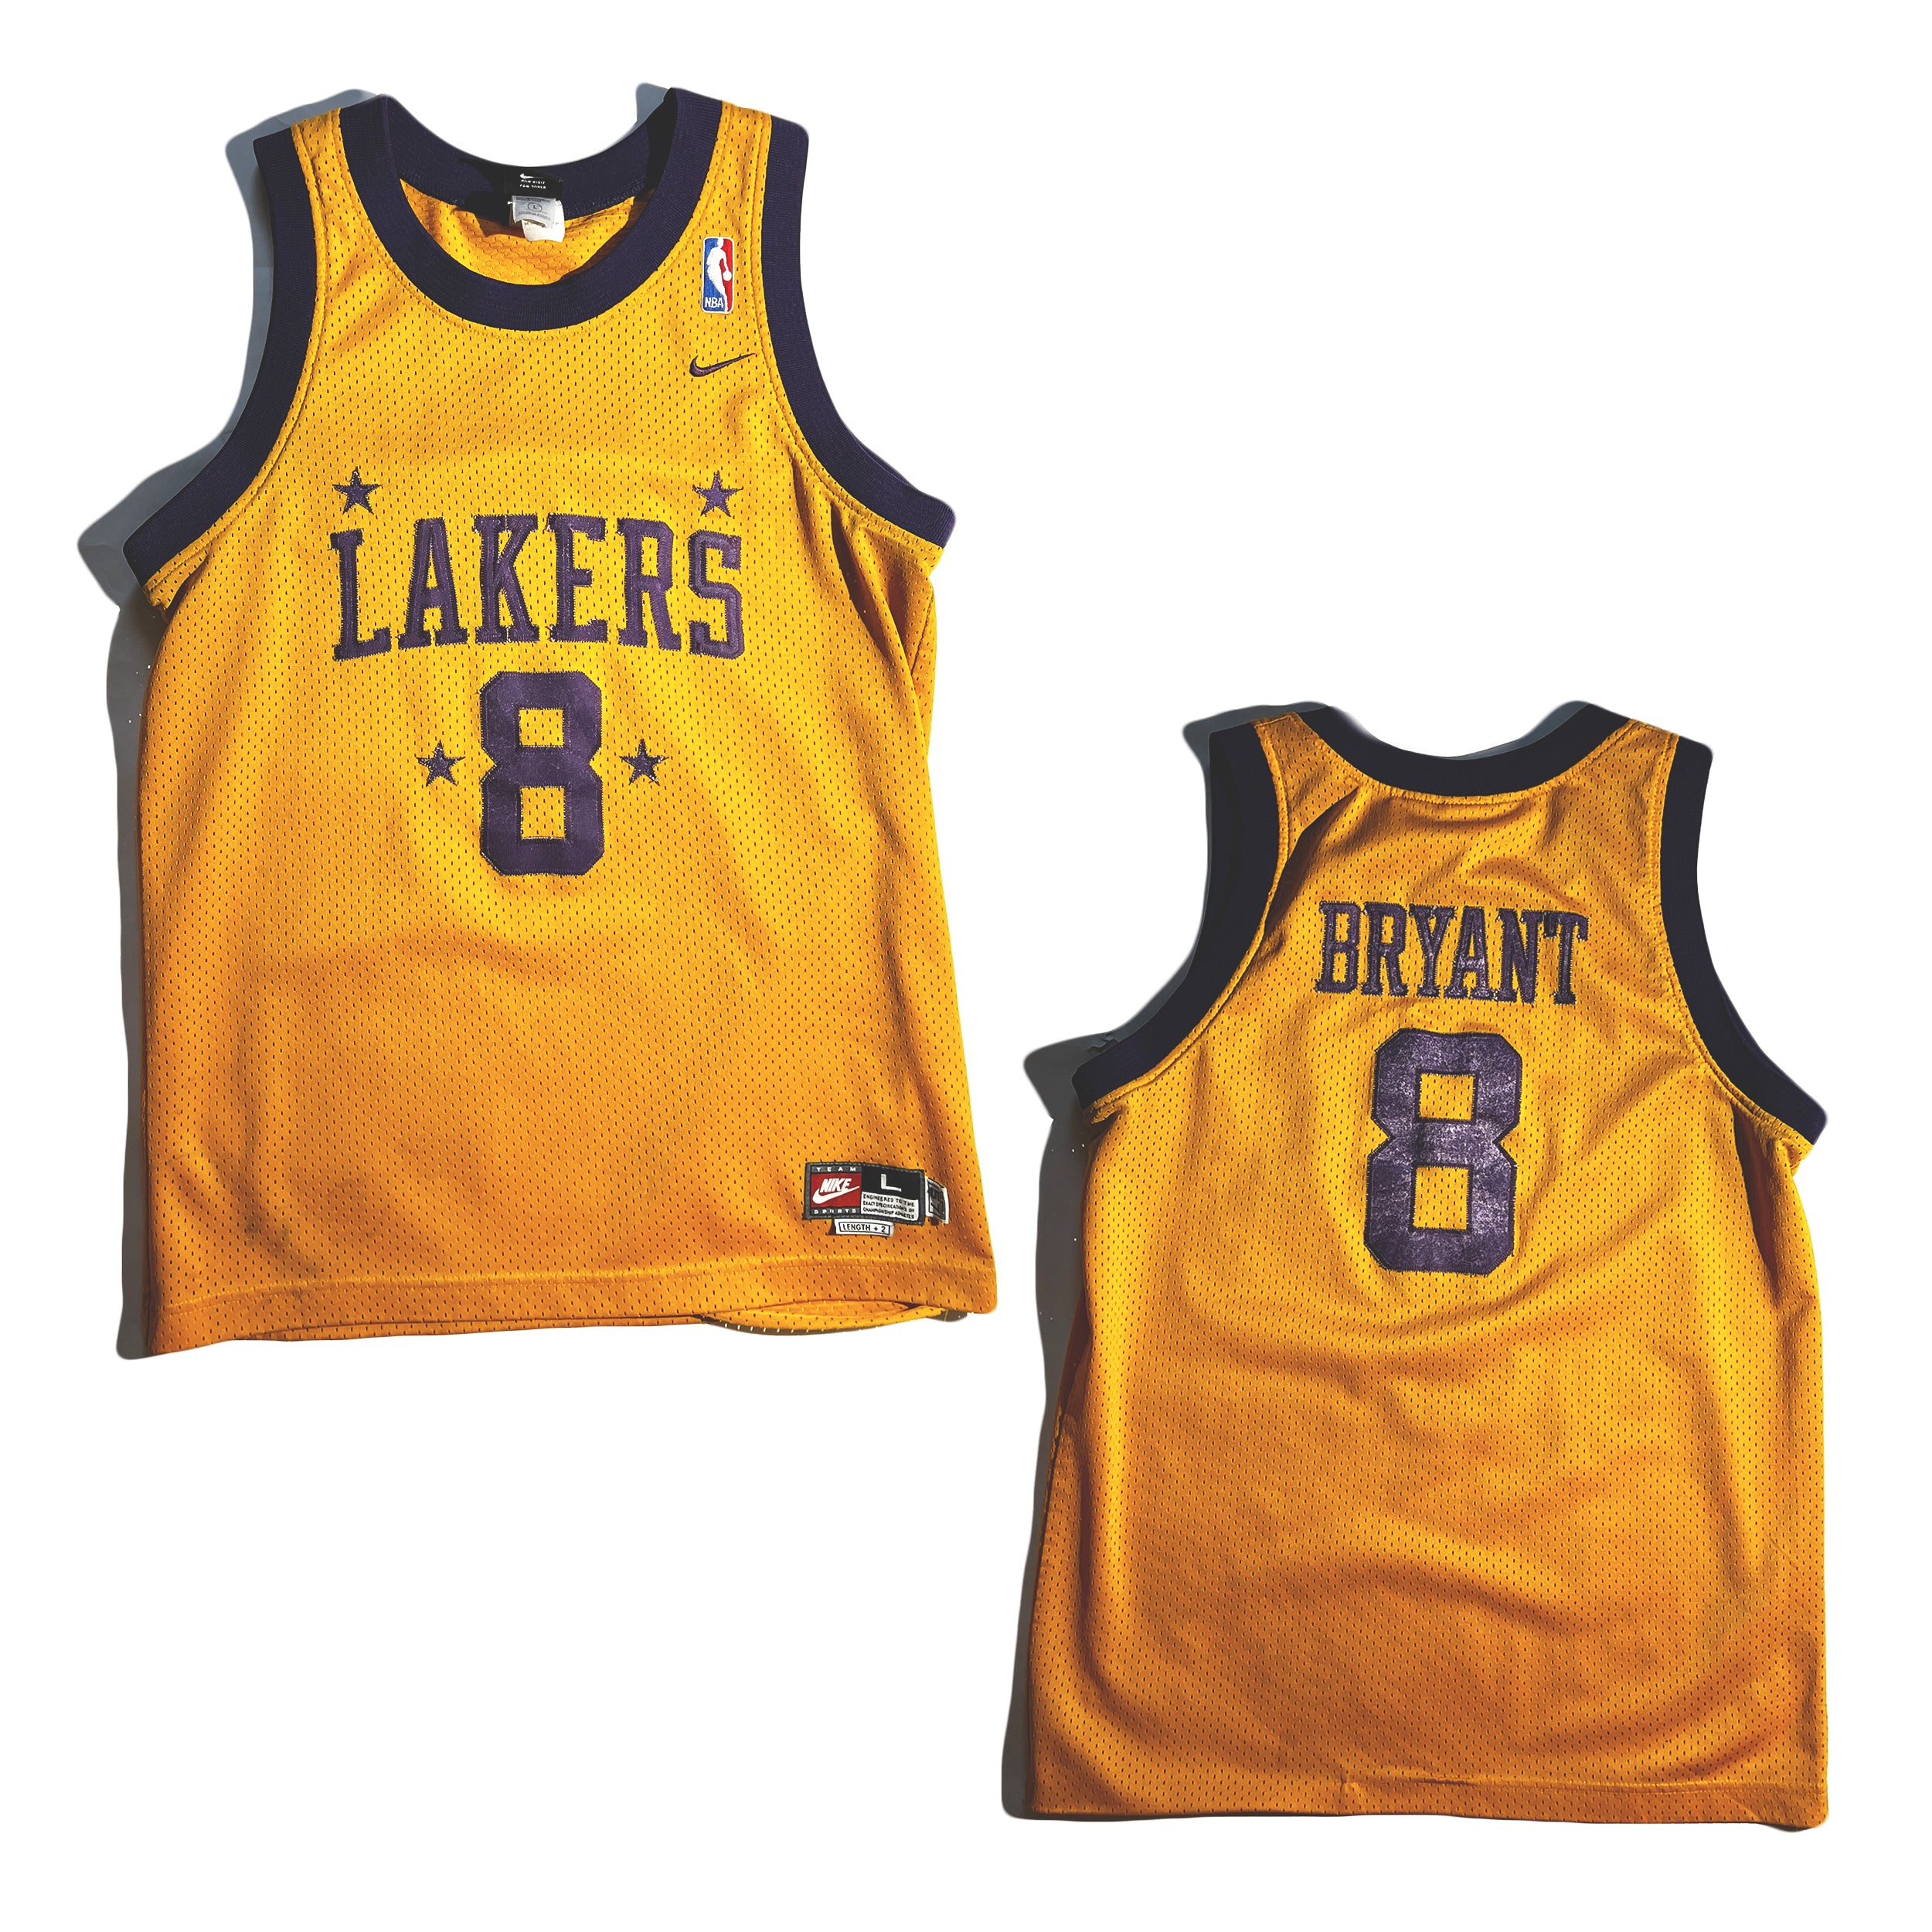 Kobe Bryant Lakers Jersey sz YM (10-12) – First Team Vintage